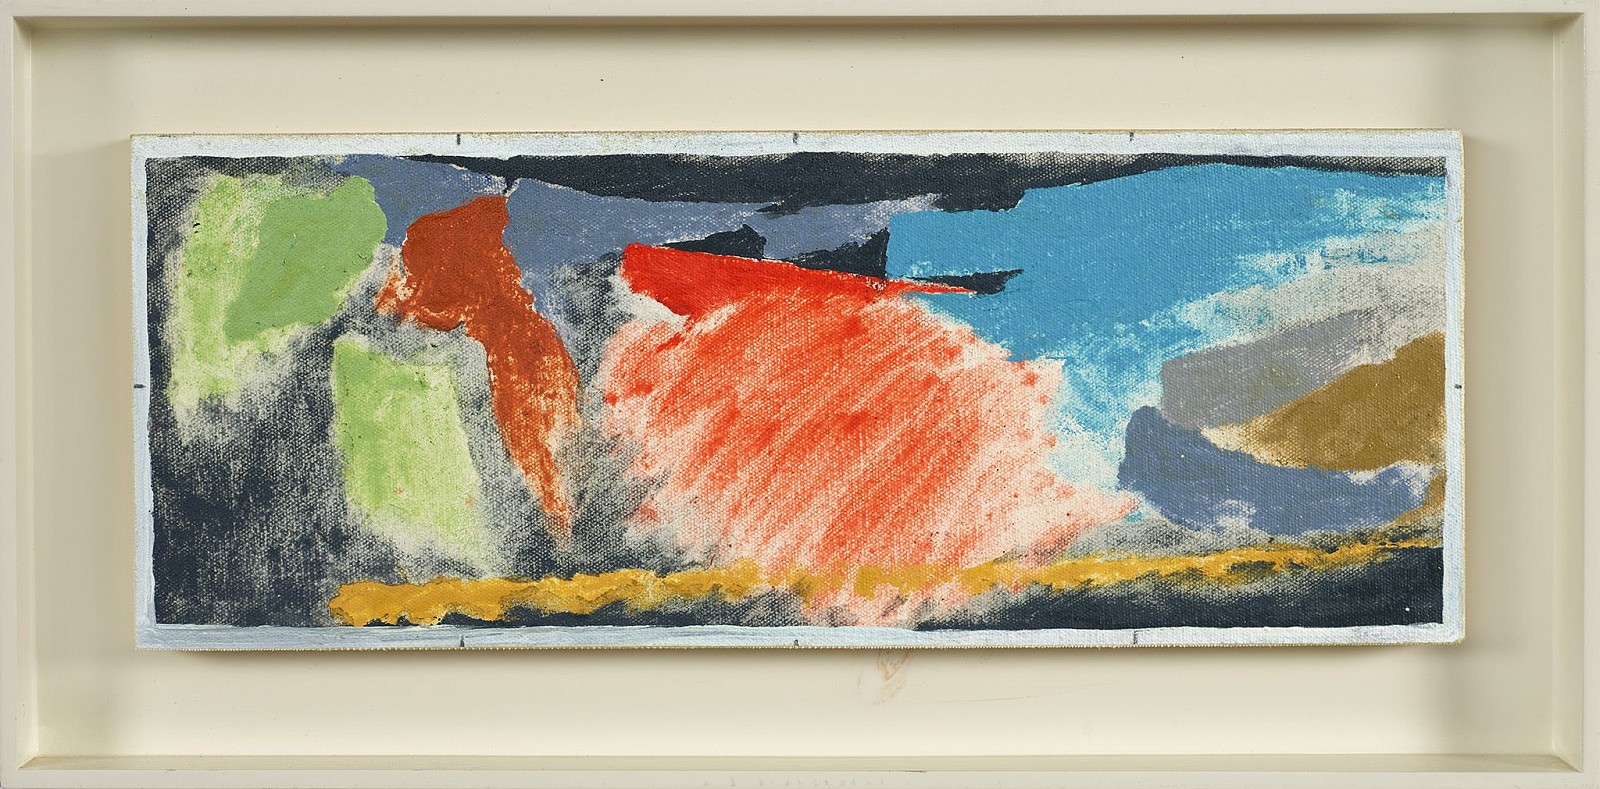 Friedel Dzubas, Hot Pursuit, 1981
Acrylic on canvas, 6 x 15 in. (15.2 x 38.1 cm)
DZU-00019